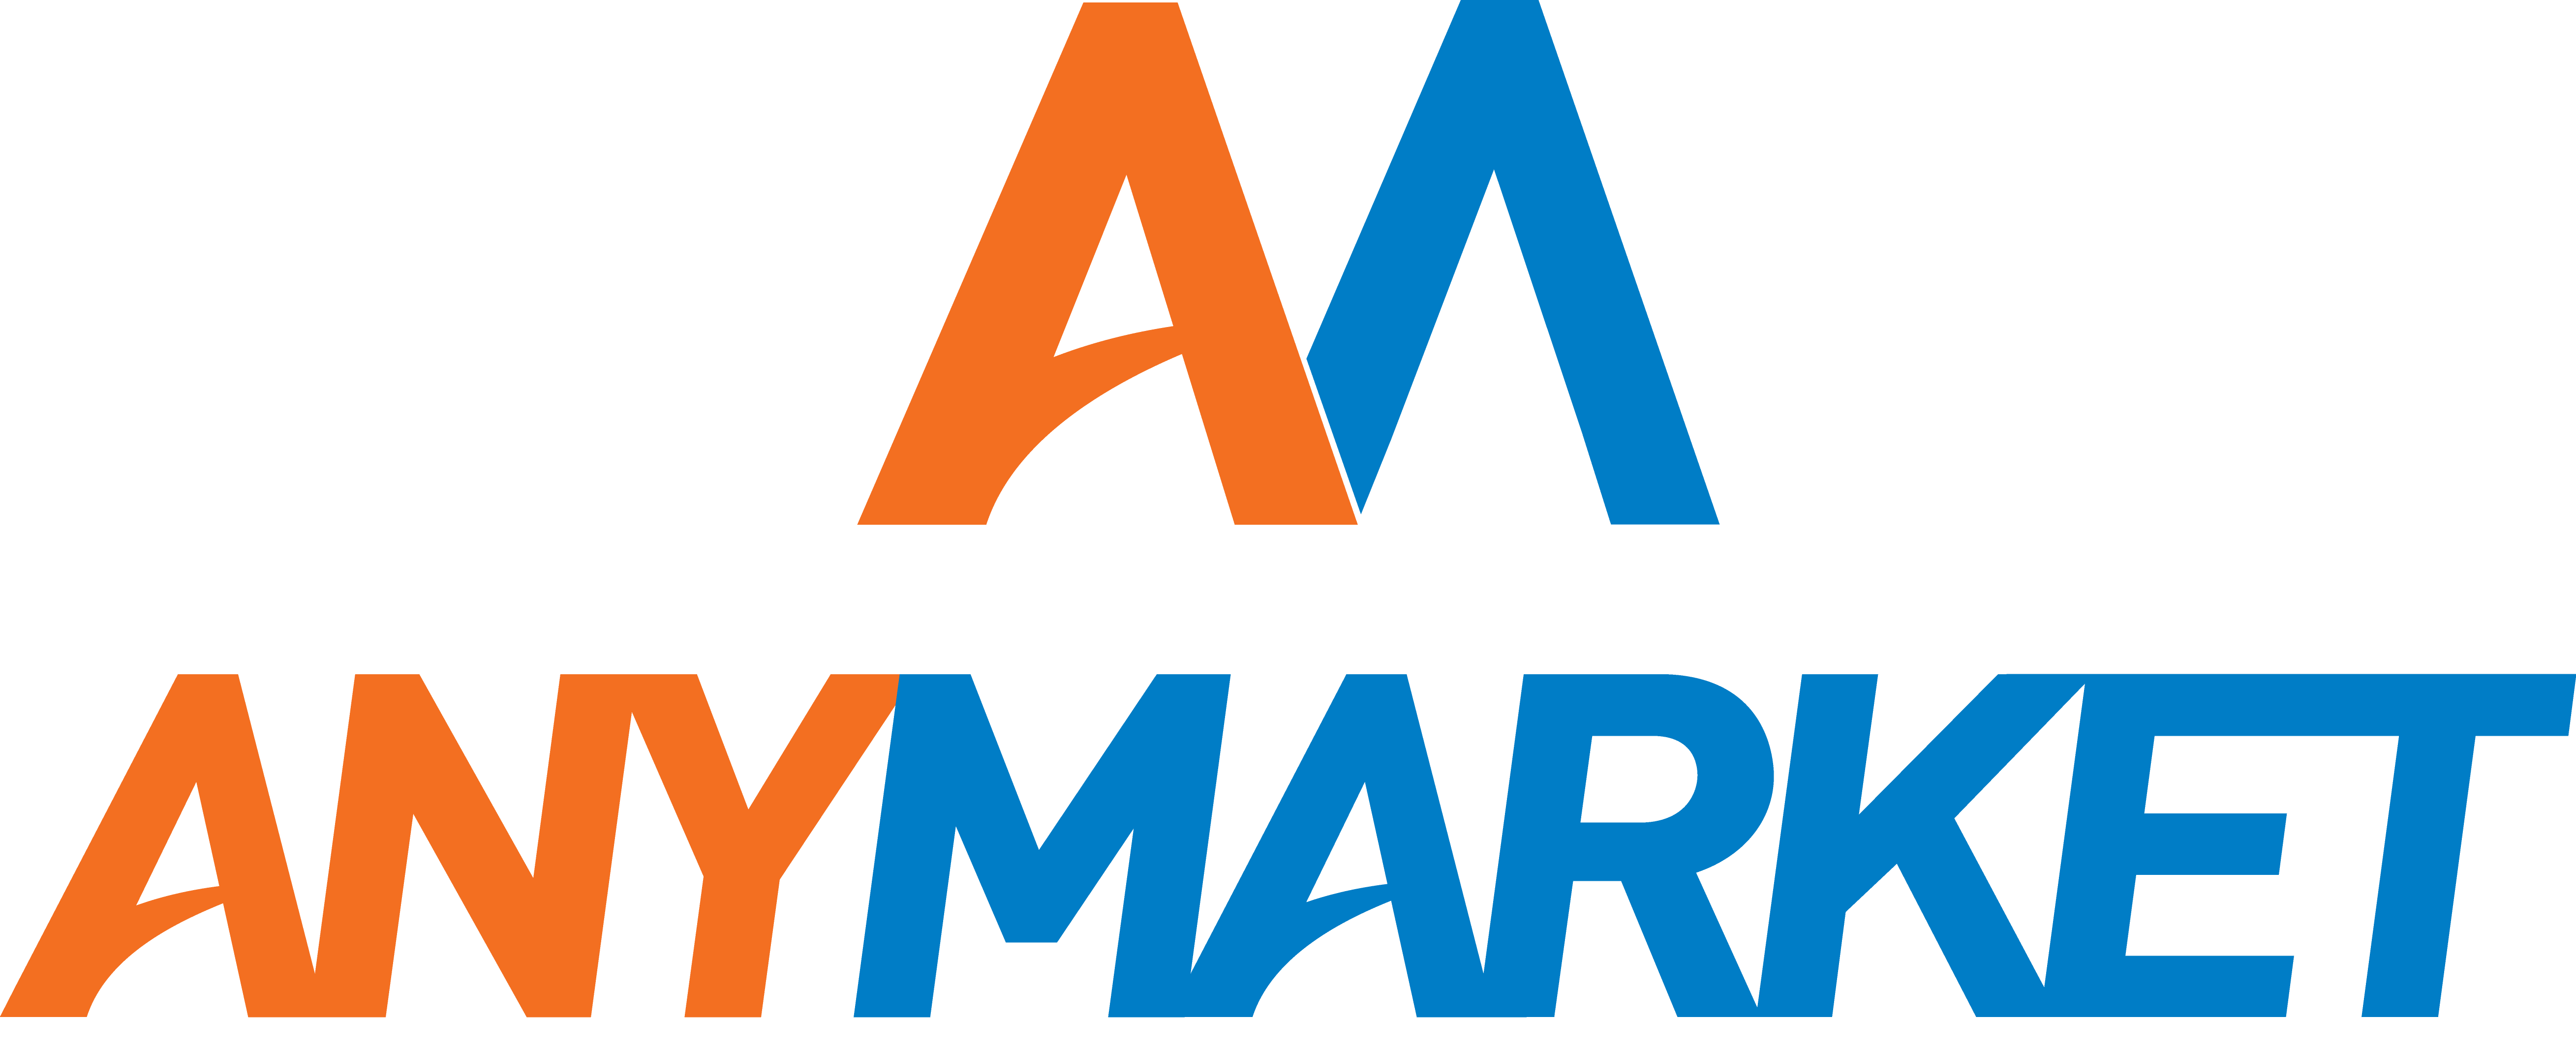 Logo parceiro da Alternativa - Anymarket Marketplace